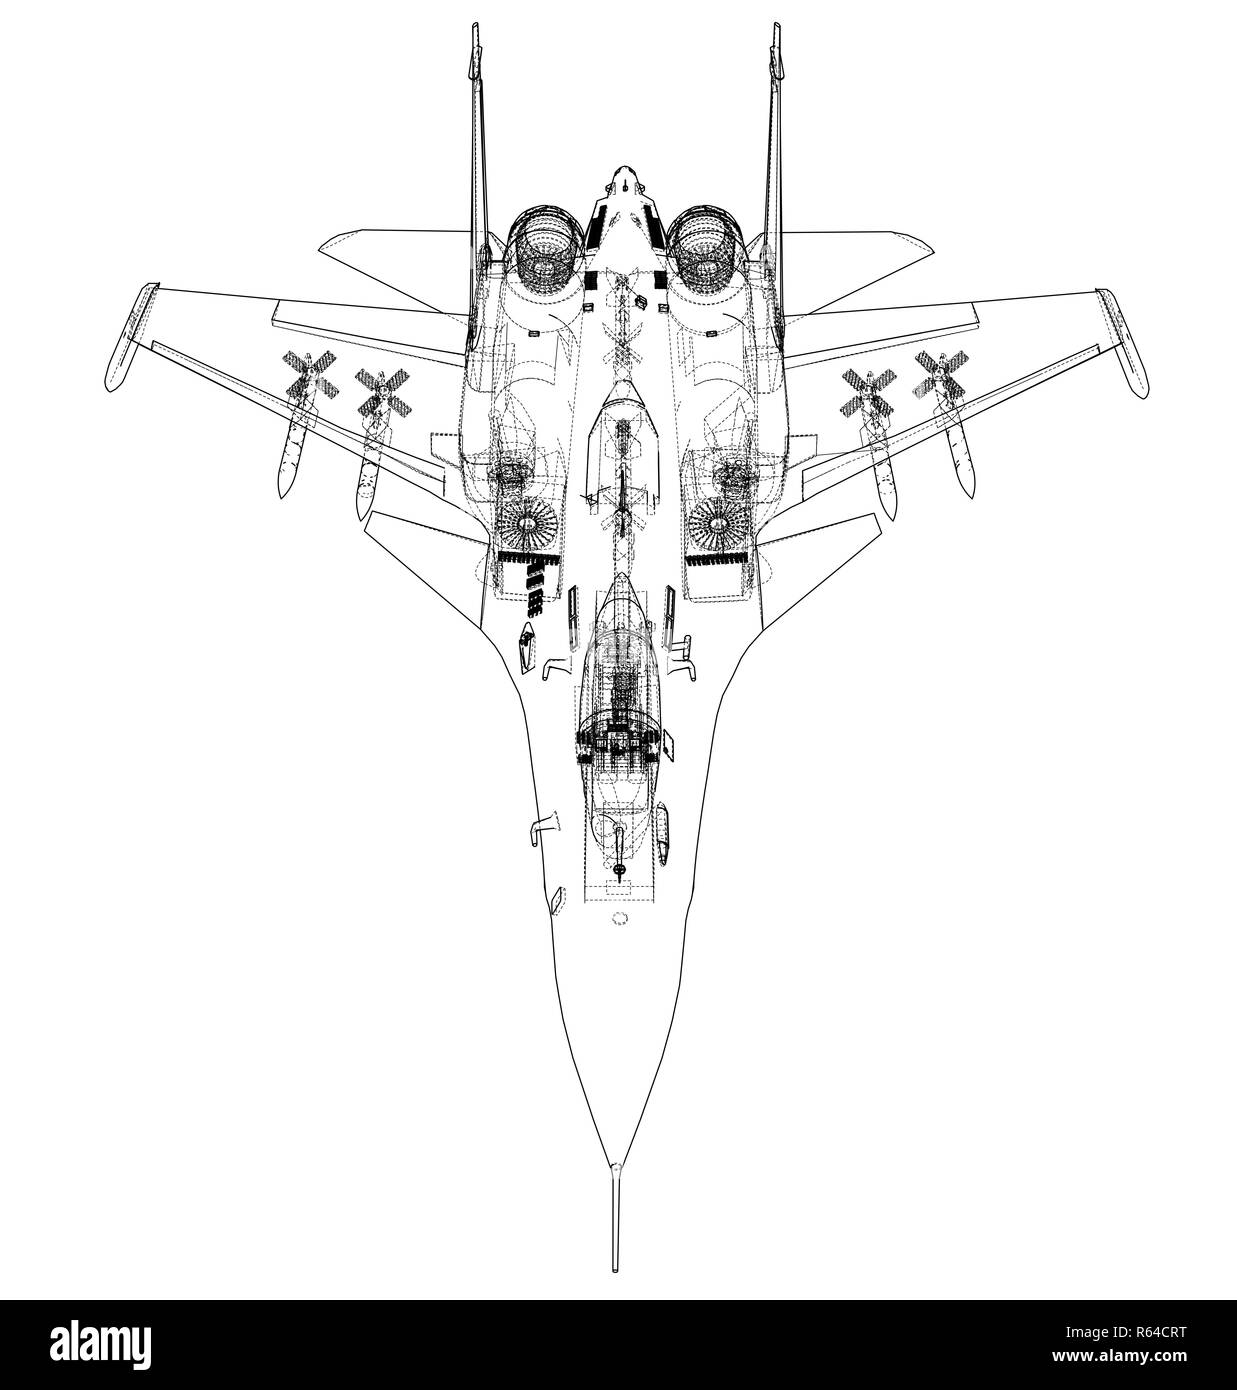 Fighter plane concept Stock Photo